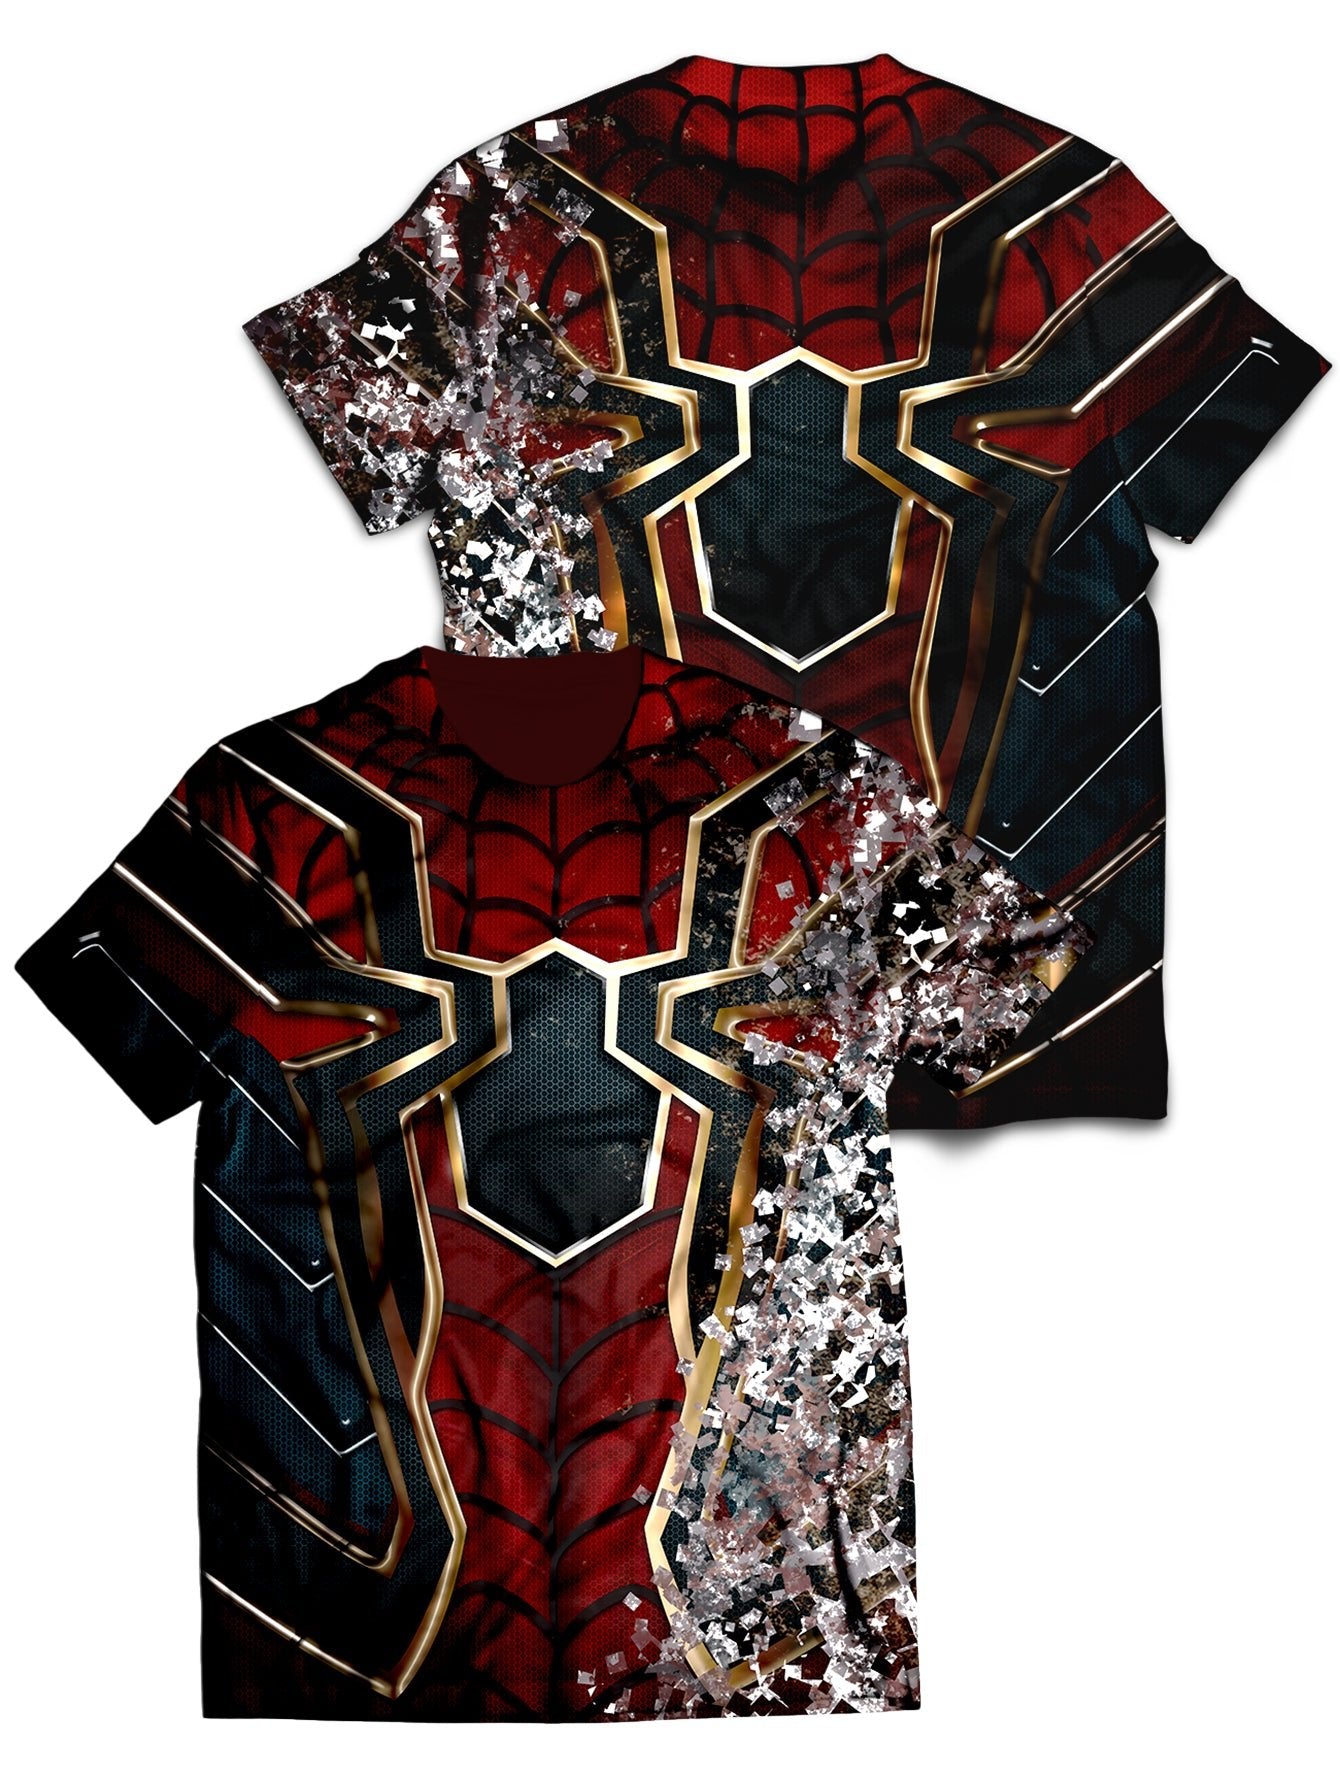 Fandomaniax - Death of Spider-man Unisex T-Shirt